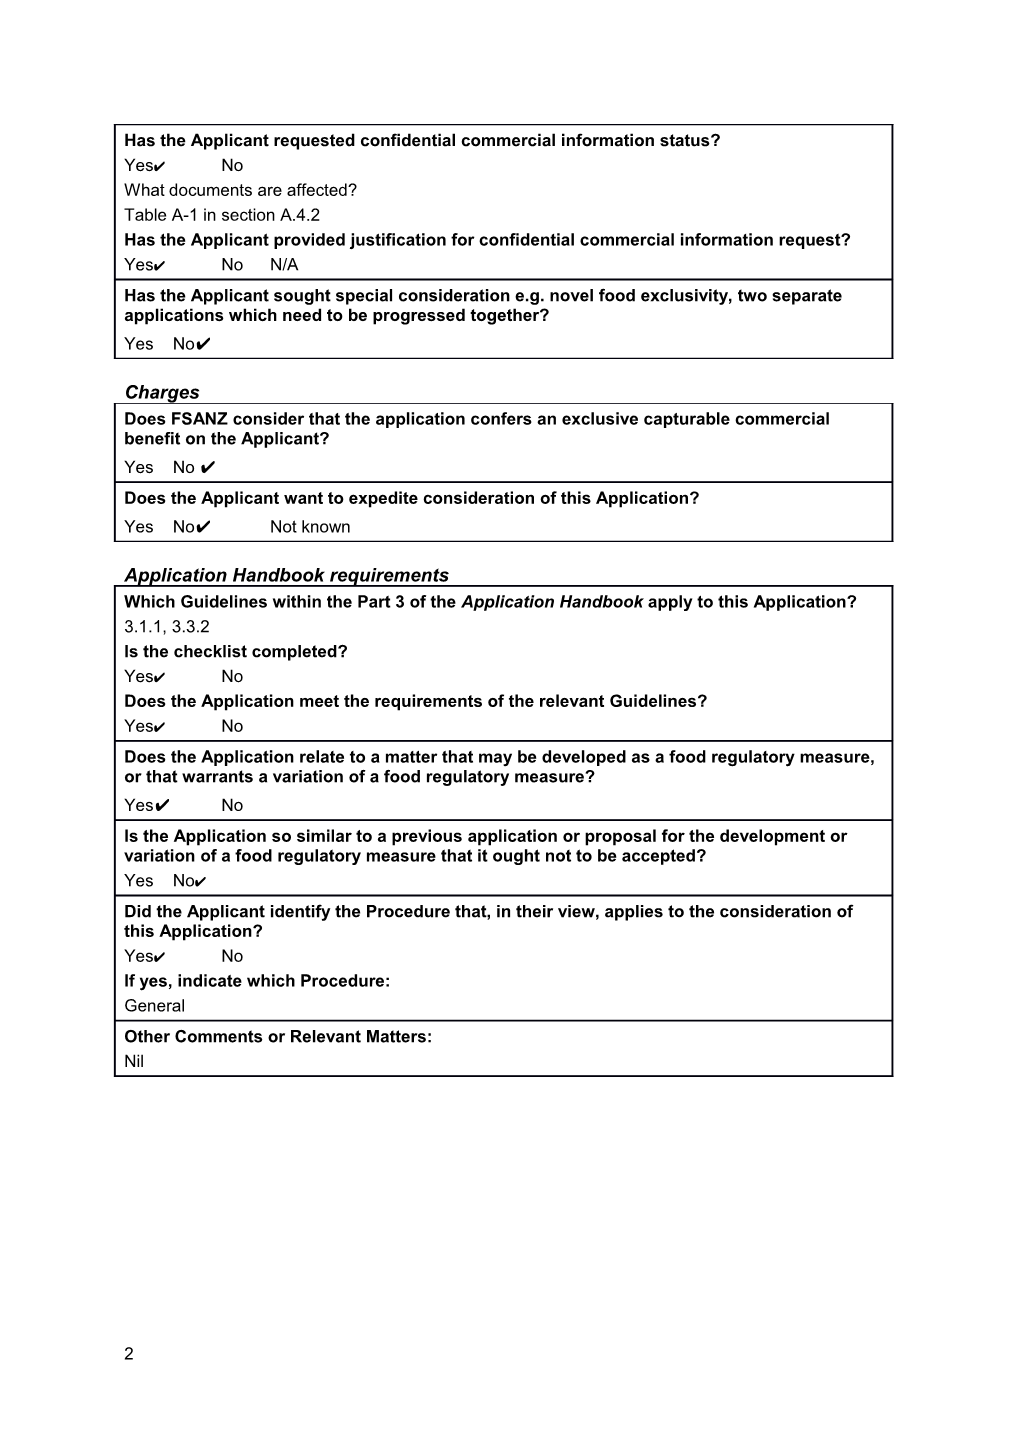 Administrative Assessment Report Applicationa1146